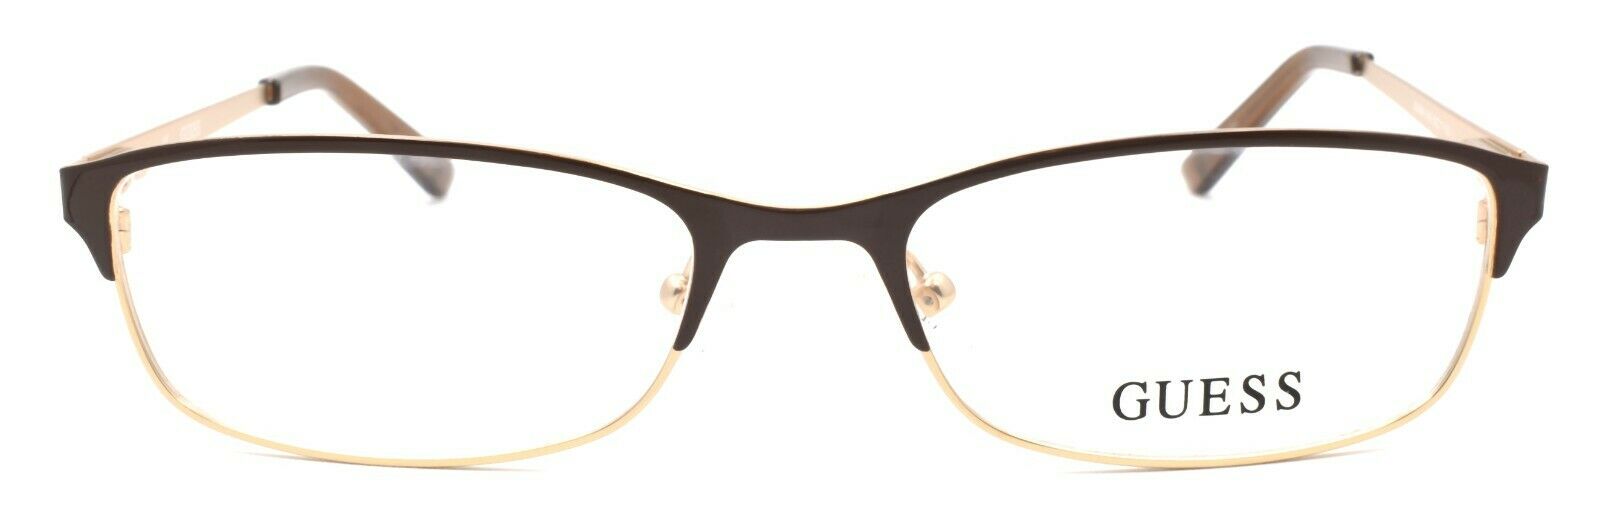 2-GUESS GU2544 045 Women's Eyeglasses Frames 52-17-135 Shiny Light Brown + CASE-664689748365-IKSpecs